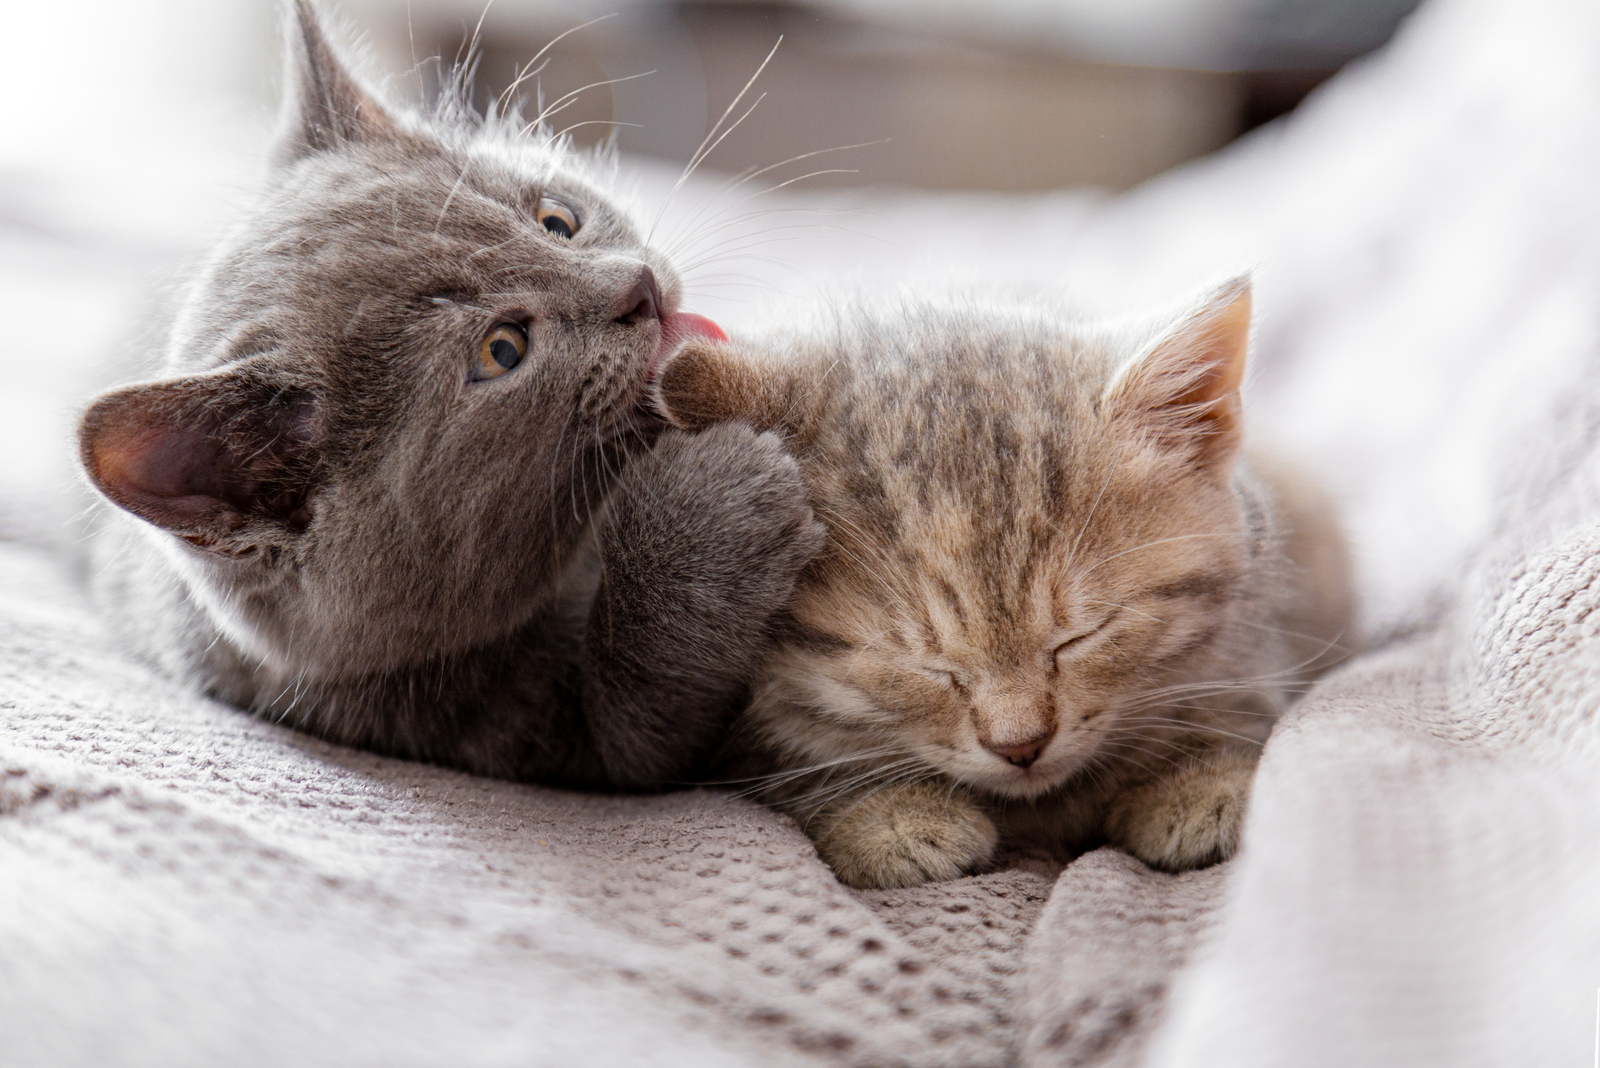 Klein grijs kitten likt oor van tabby kitten